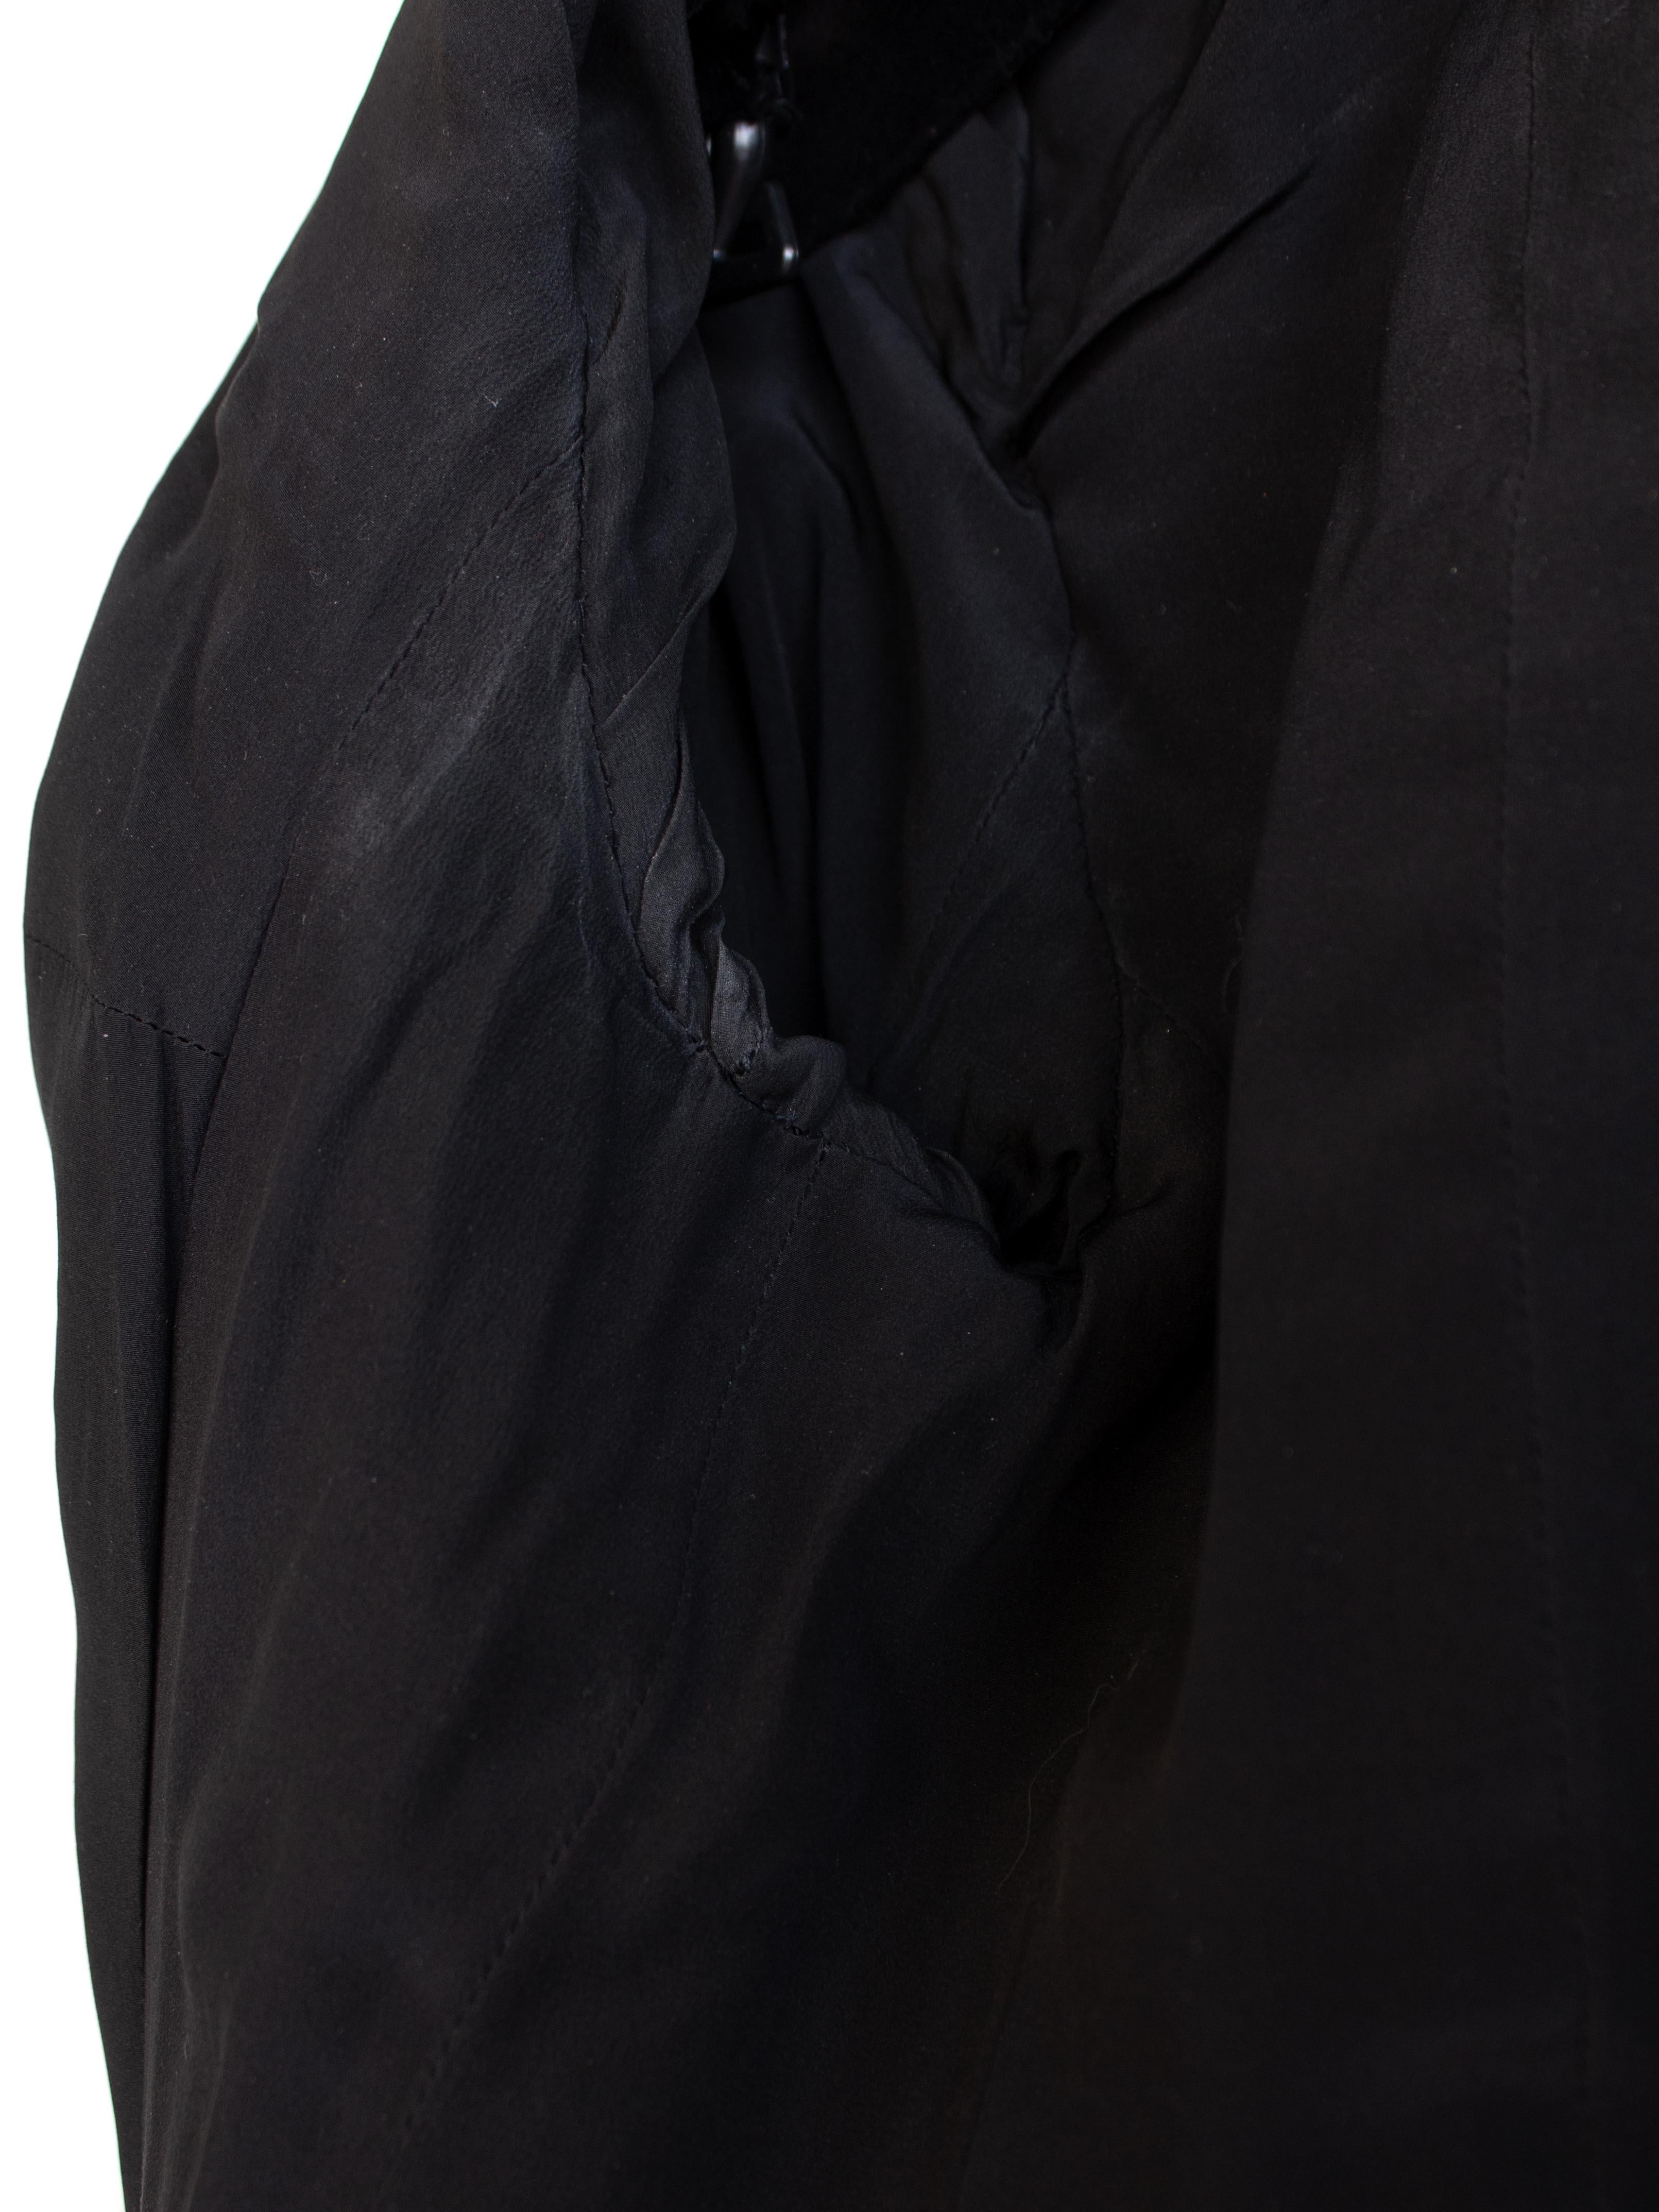 Chanel Vintage Haute Couture S/S 1995 Black White CC Tweed Jacket Skirt Suit 13